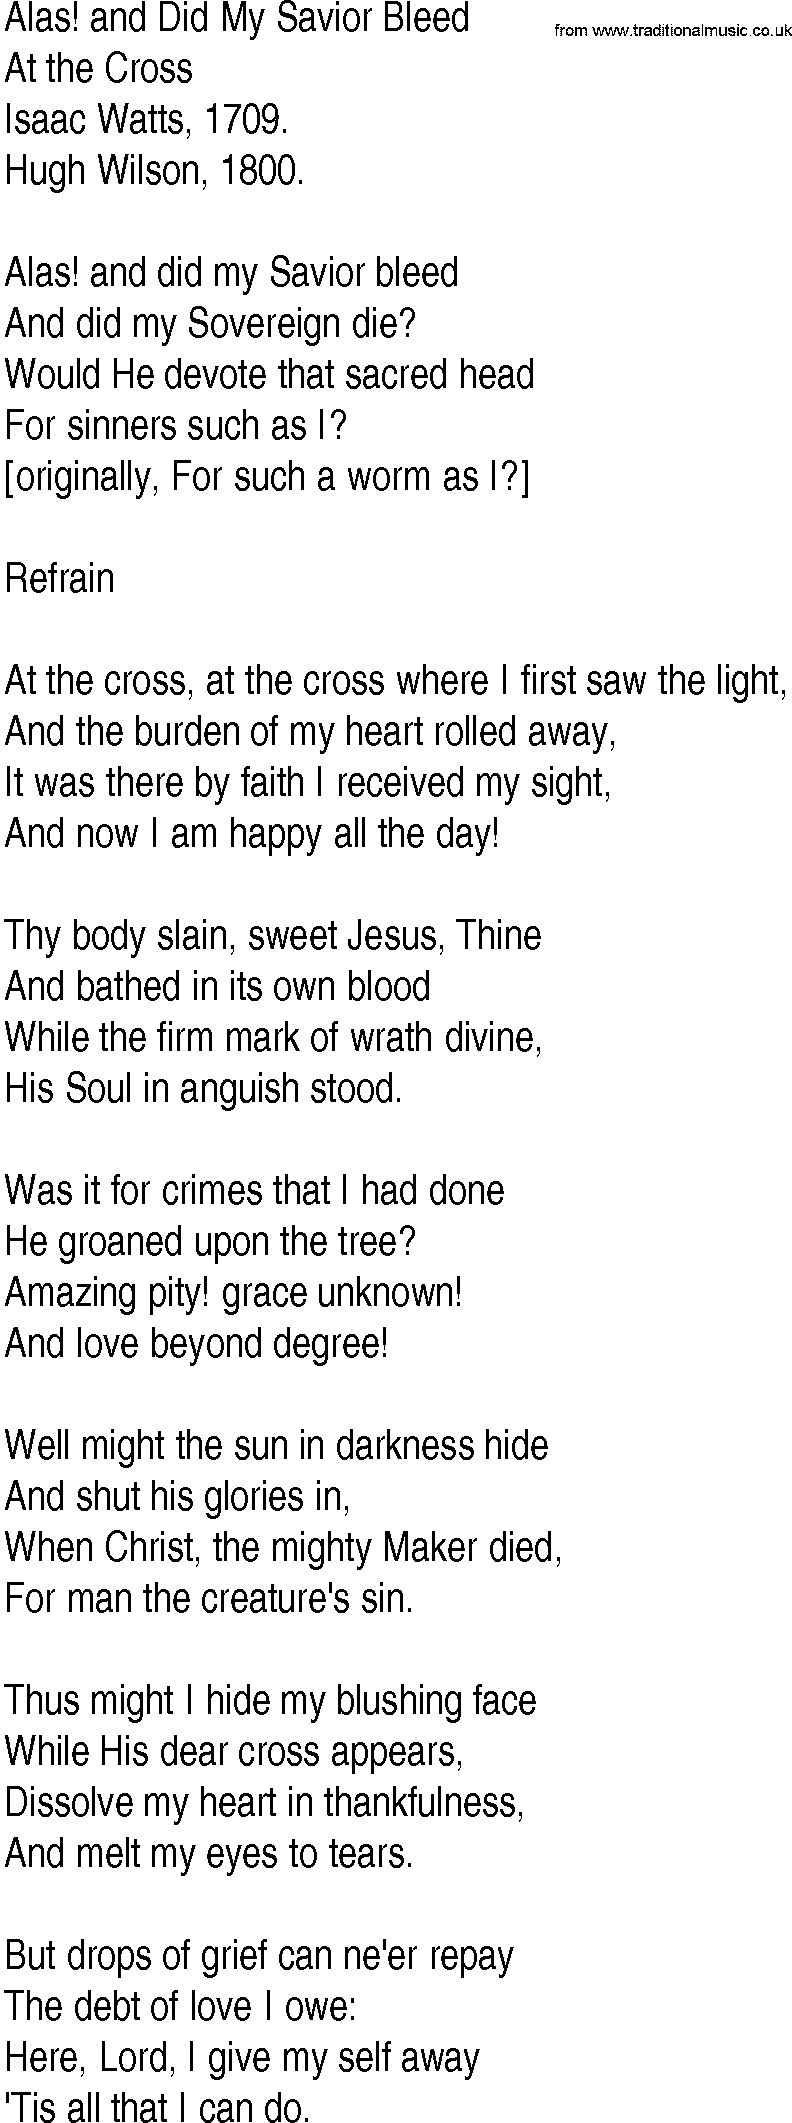 Hymn and Gospel Song: Alas! and Did My Savior Bleed by Isaac Watts lyrics